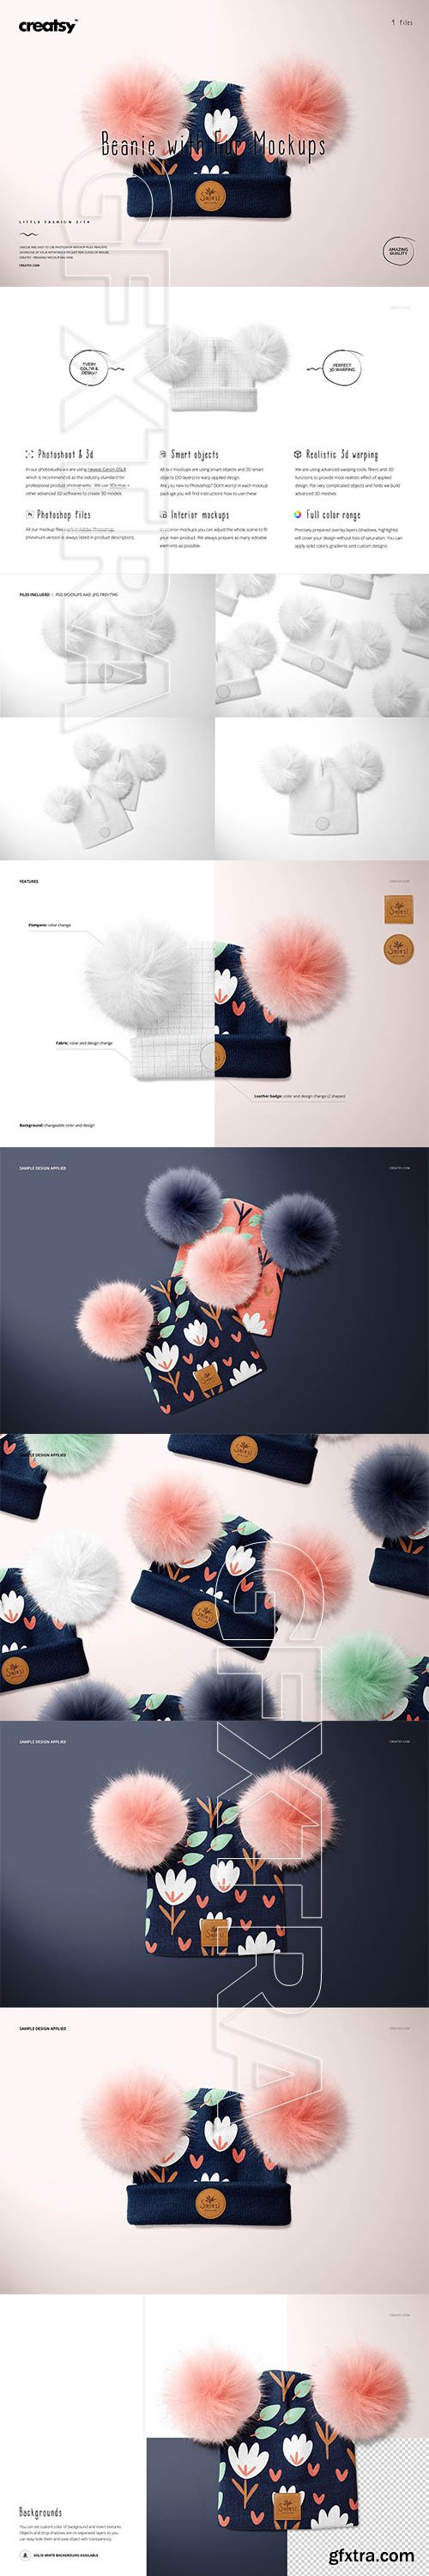 CreativeMarket - Beanie with Fur Pompons Mockup Set 5938906